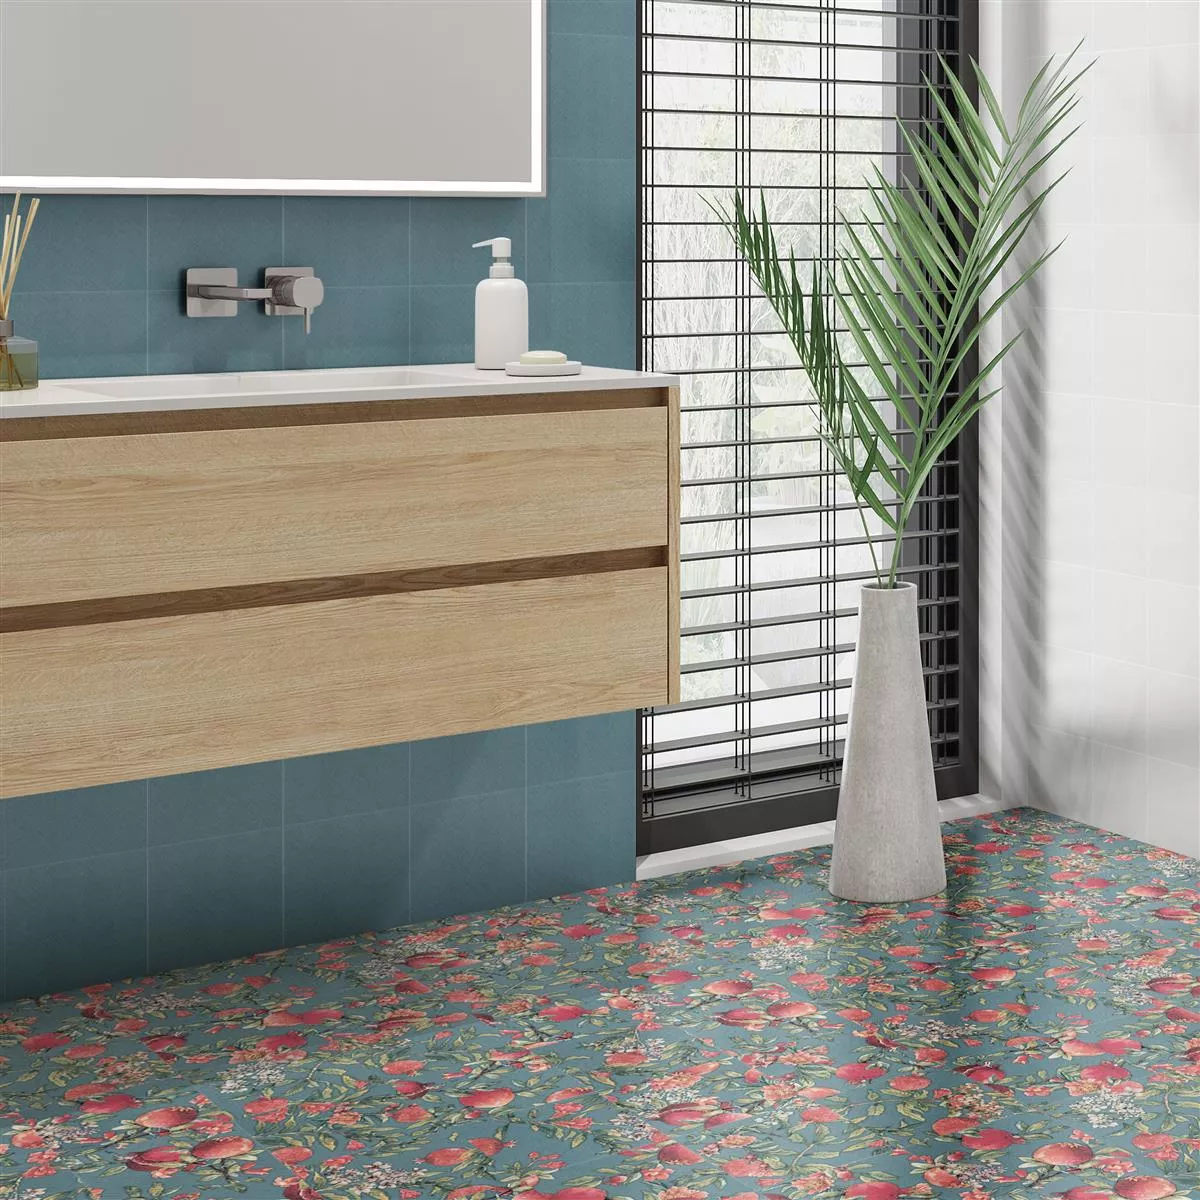 Sample Floor Tiles Flowerfield 18,5x18,5cm Blue Decor